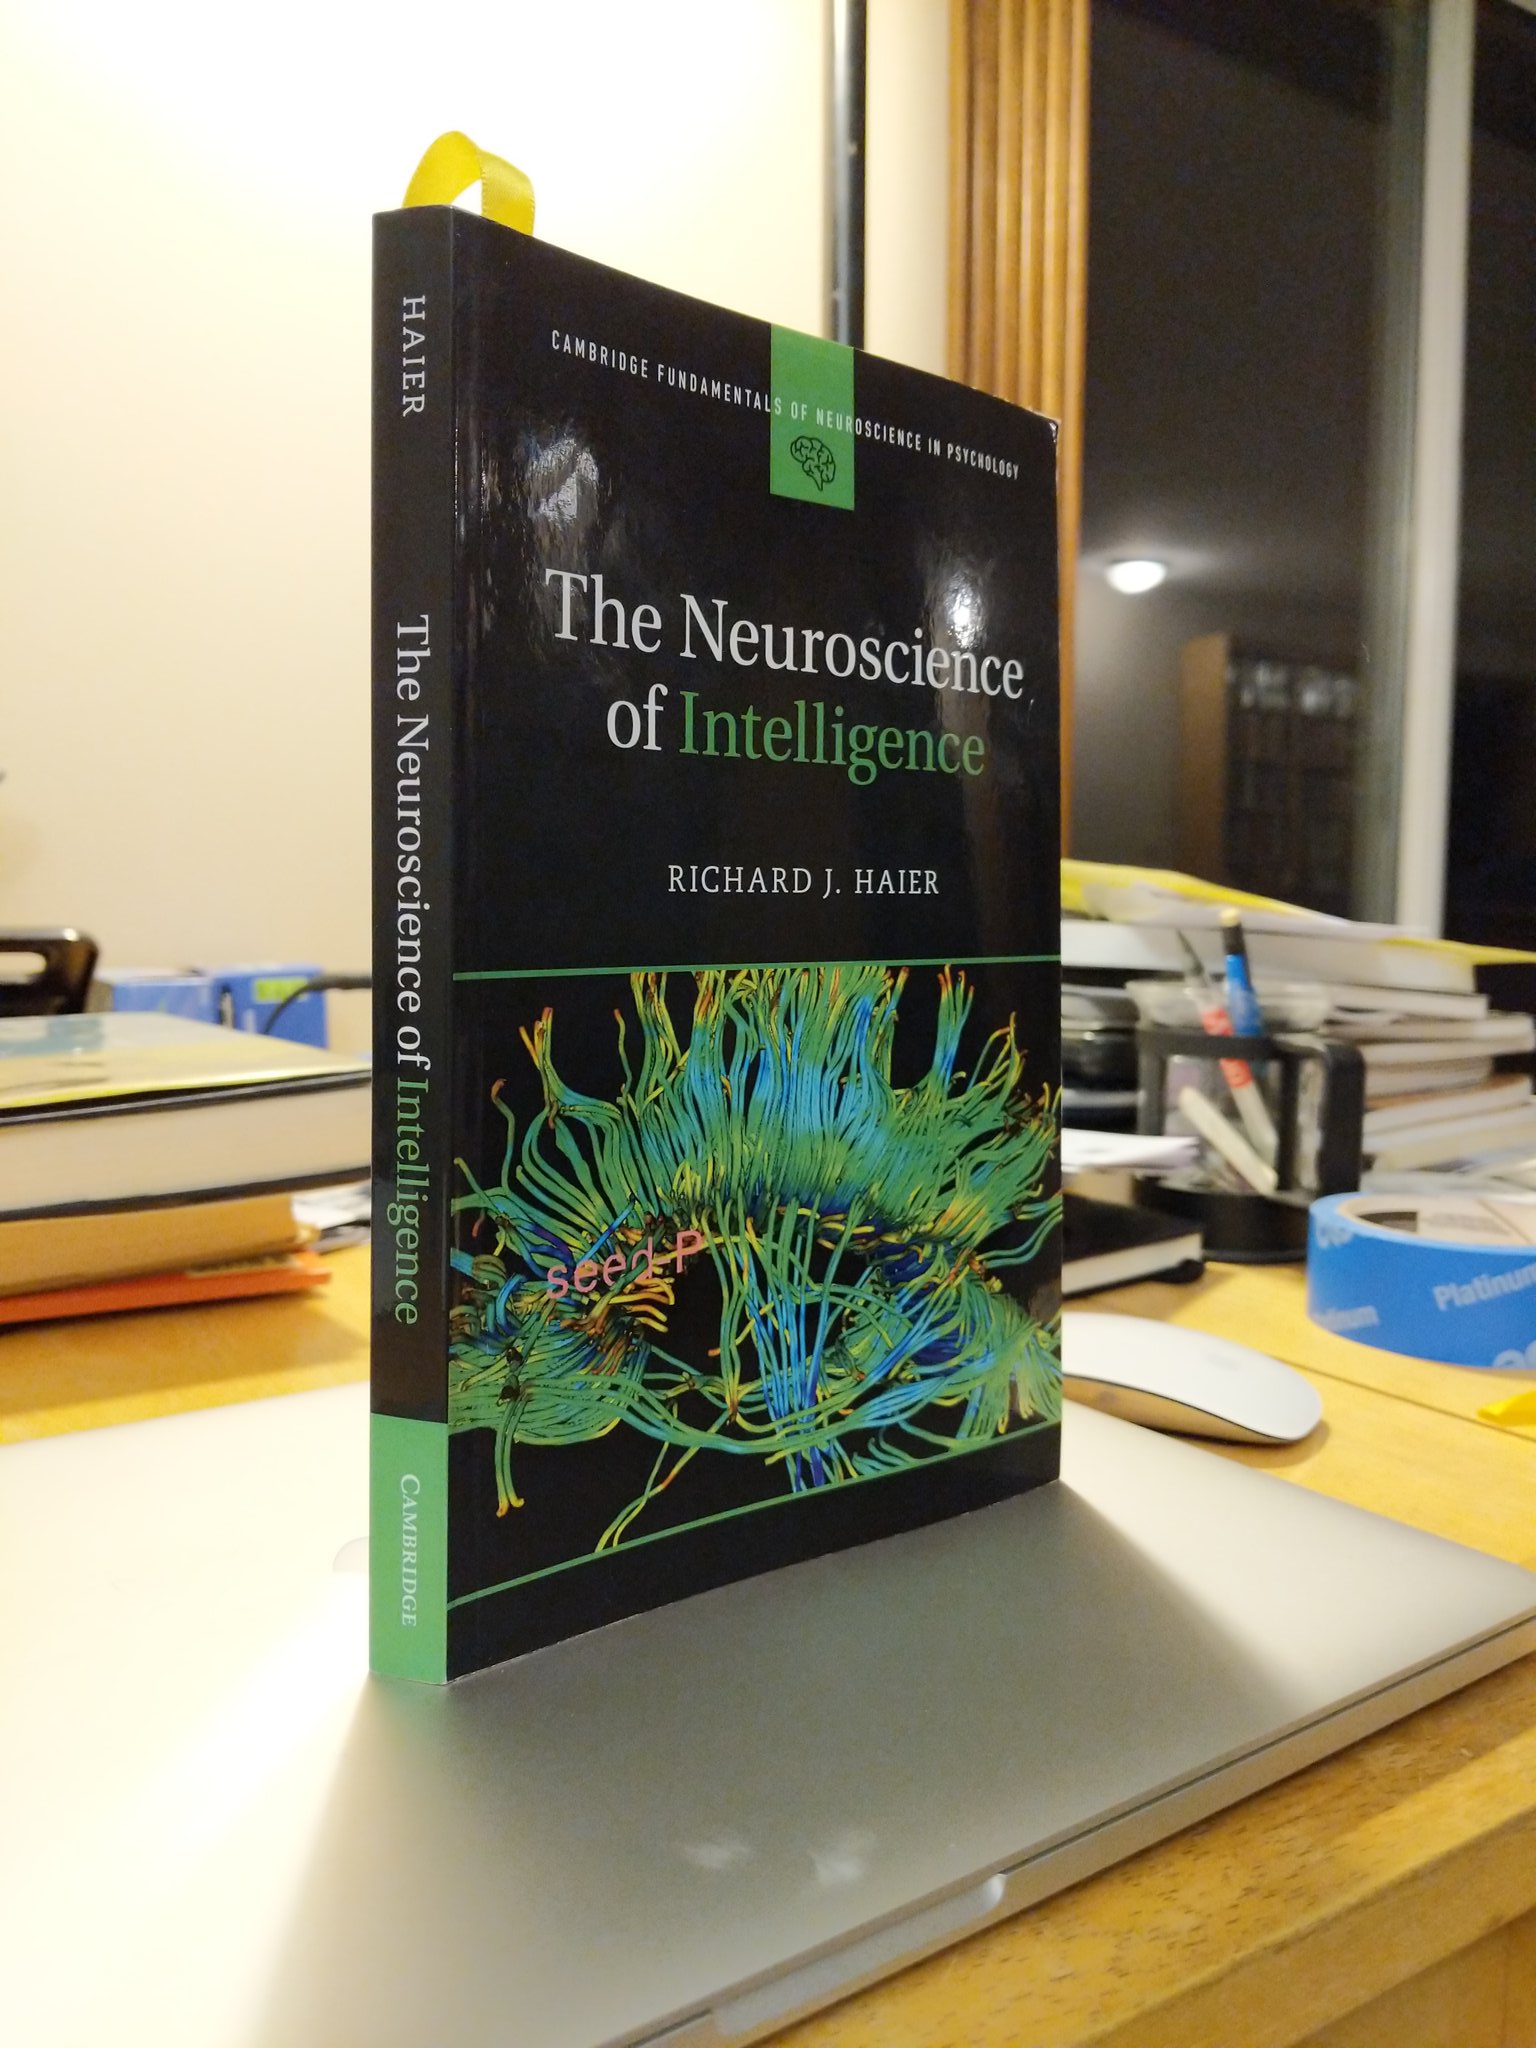 The Neuroscience of Intelligence by Haier, Richard J.